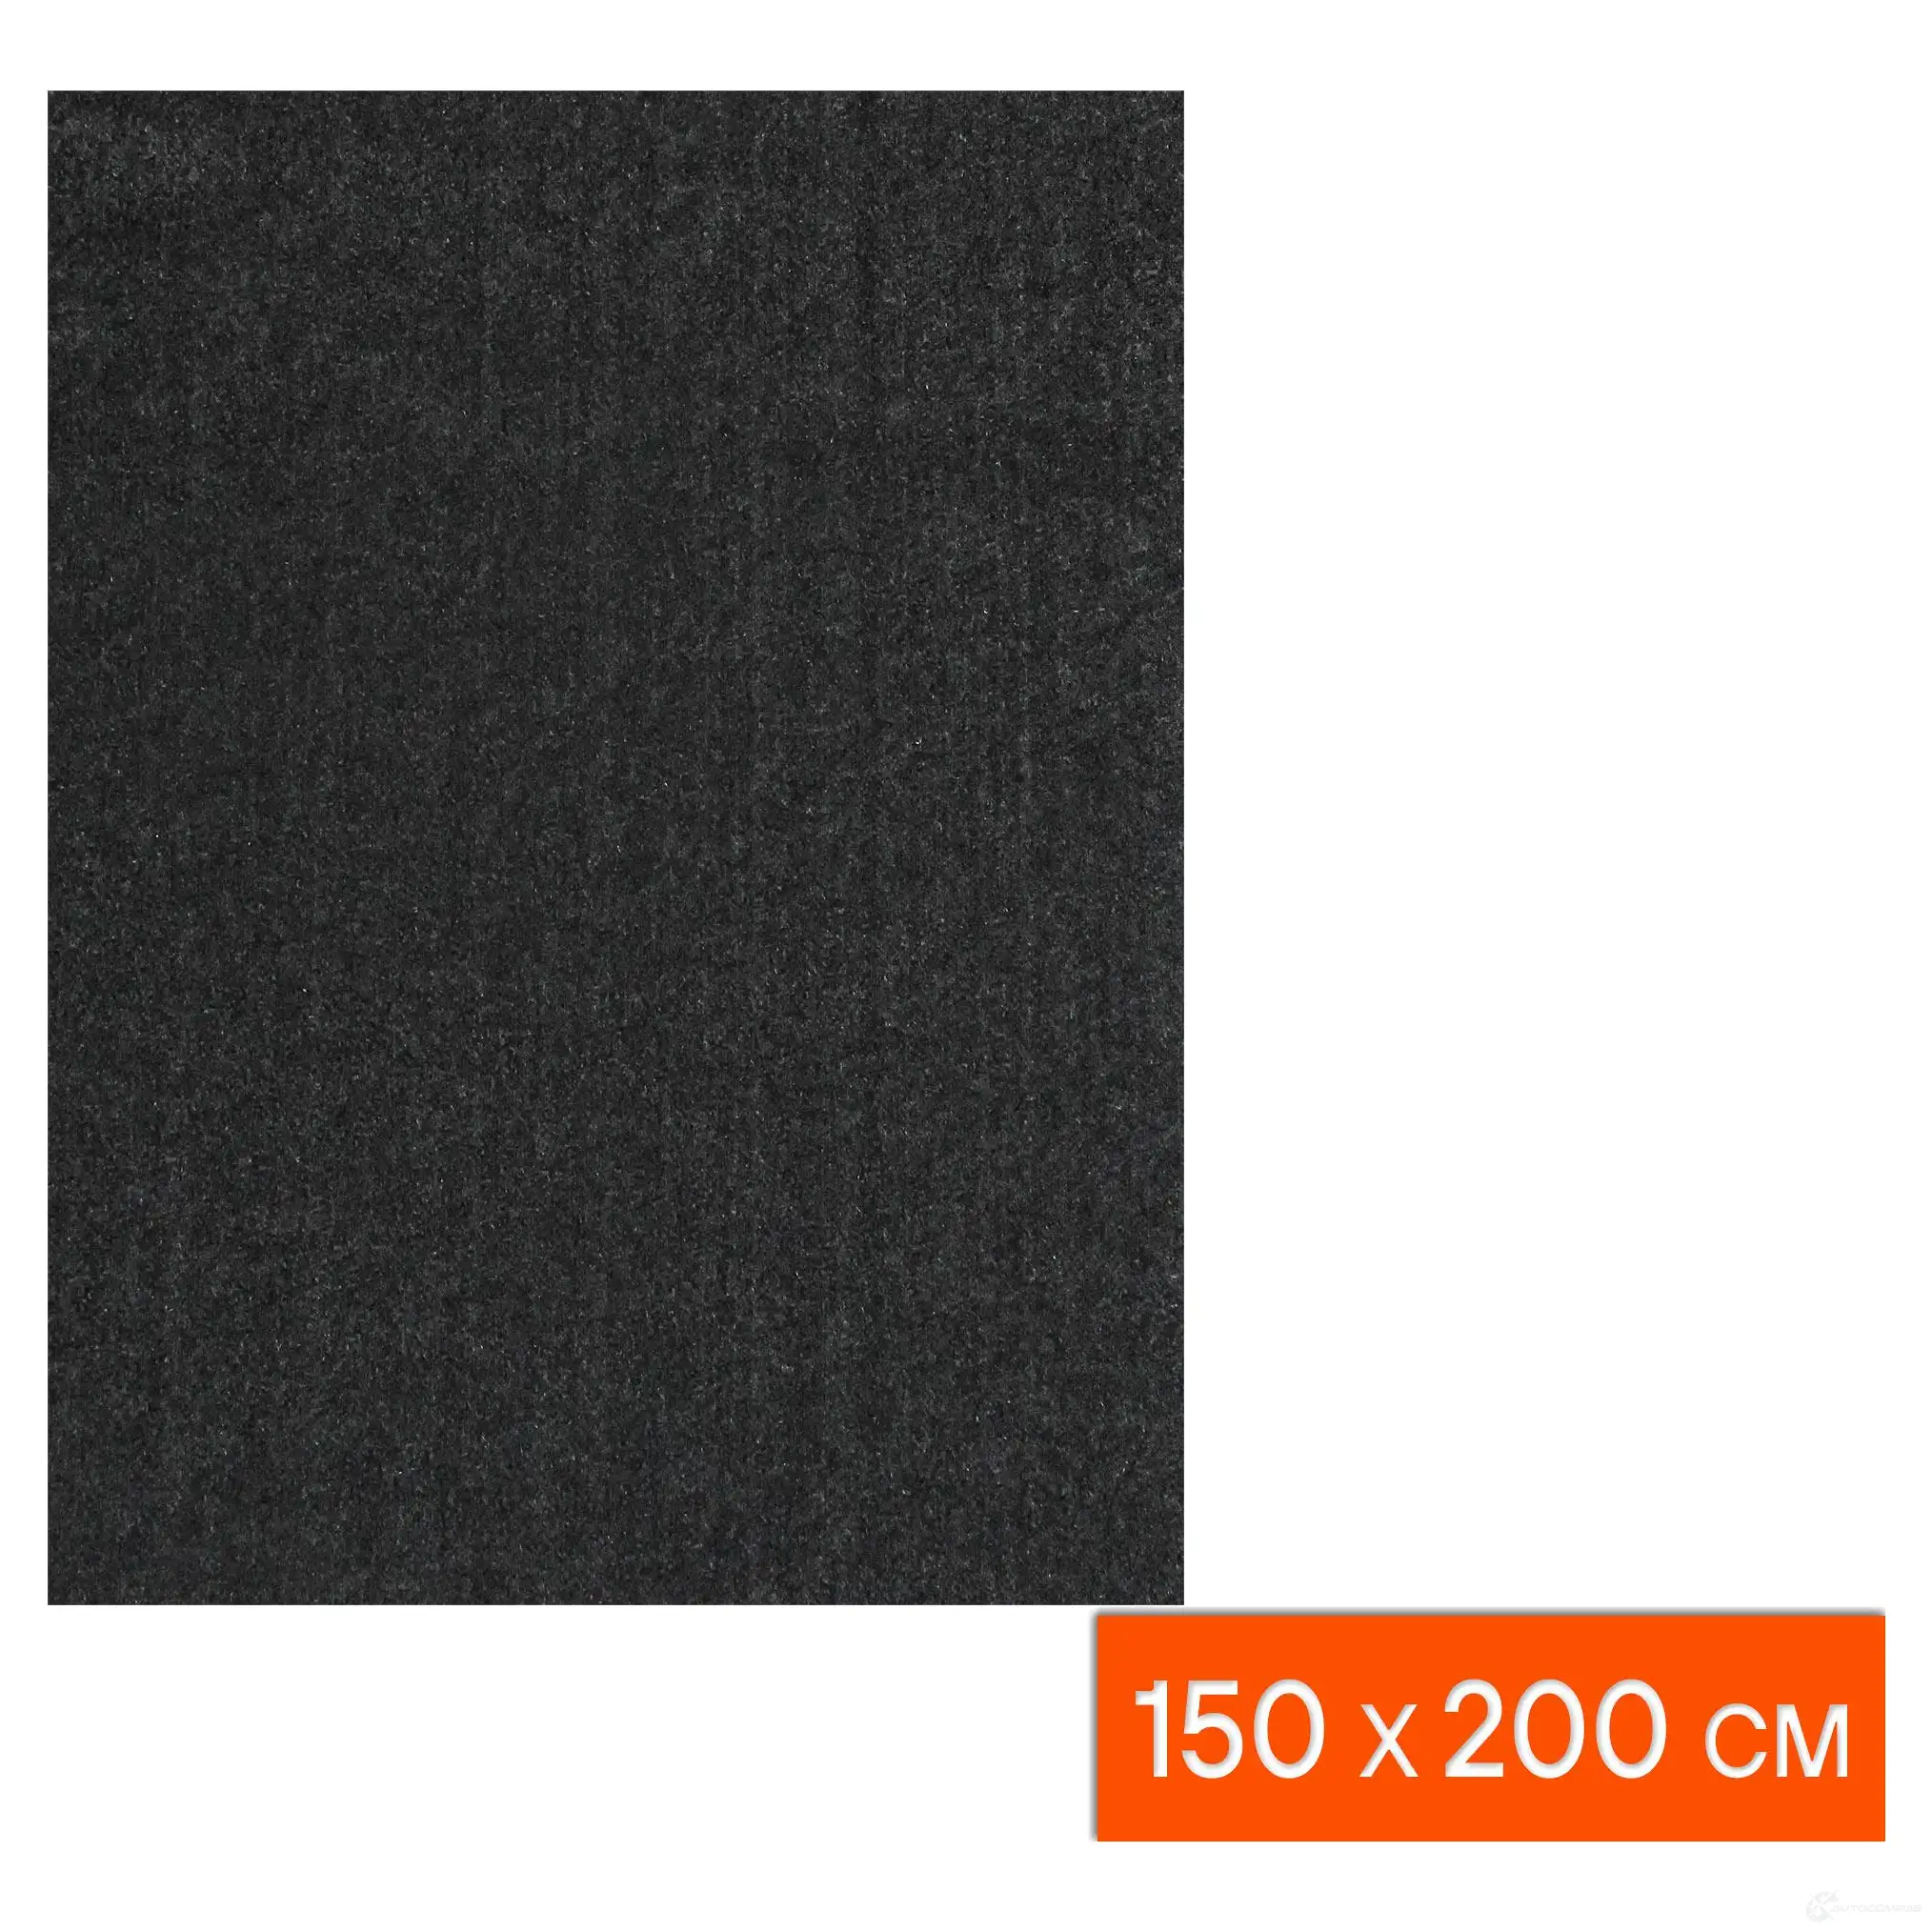 Шумоизоляция (декор) Карпет (150*200 см), акуст.прозрачн. ткань (220-250 г/м), черн. AIRLINE 1438173328 T G1O3Z8 adsd001 изображение 2